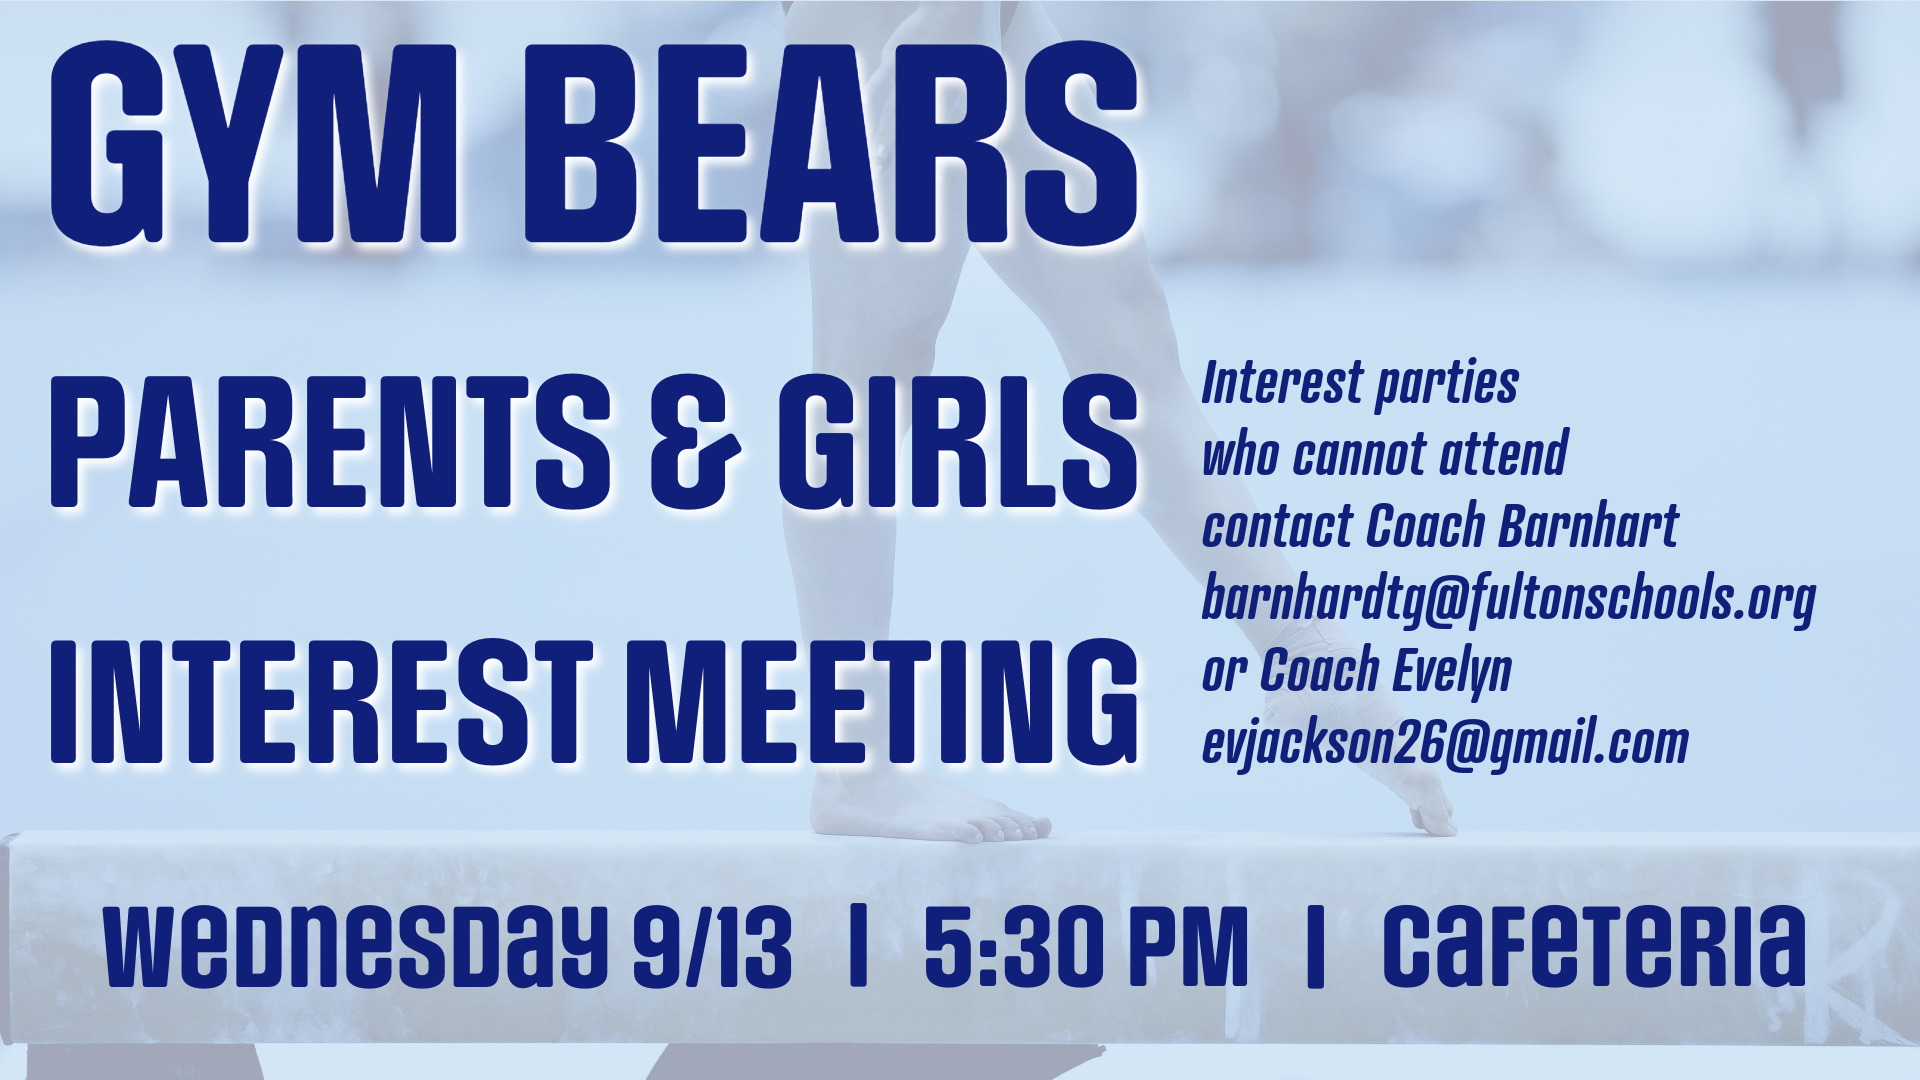 Parent and Girls Interest Meeting Wednesday 9/13